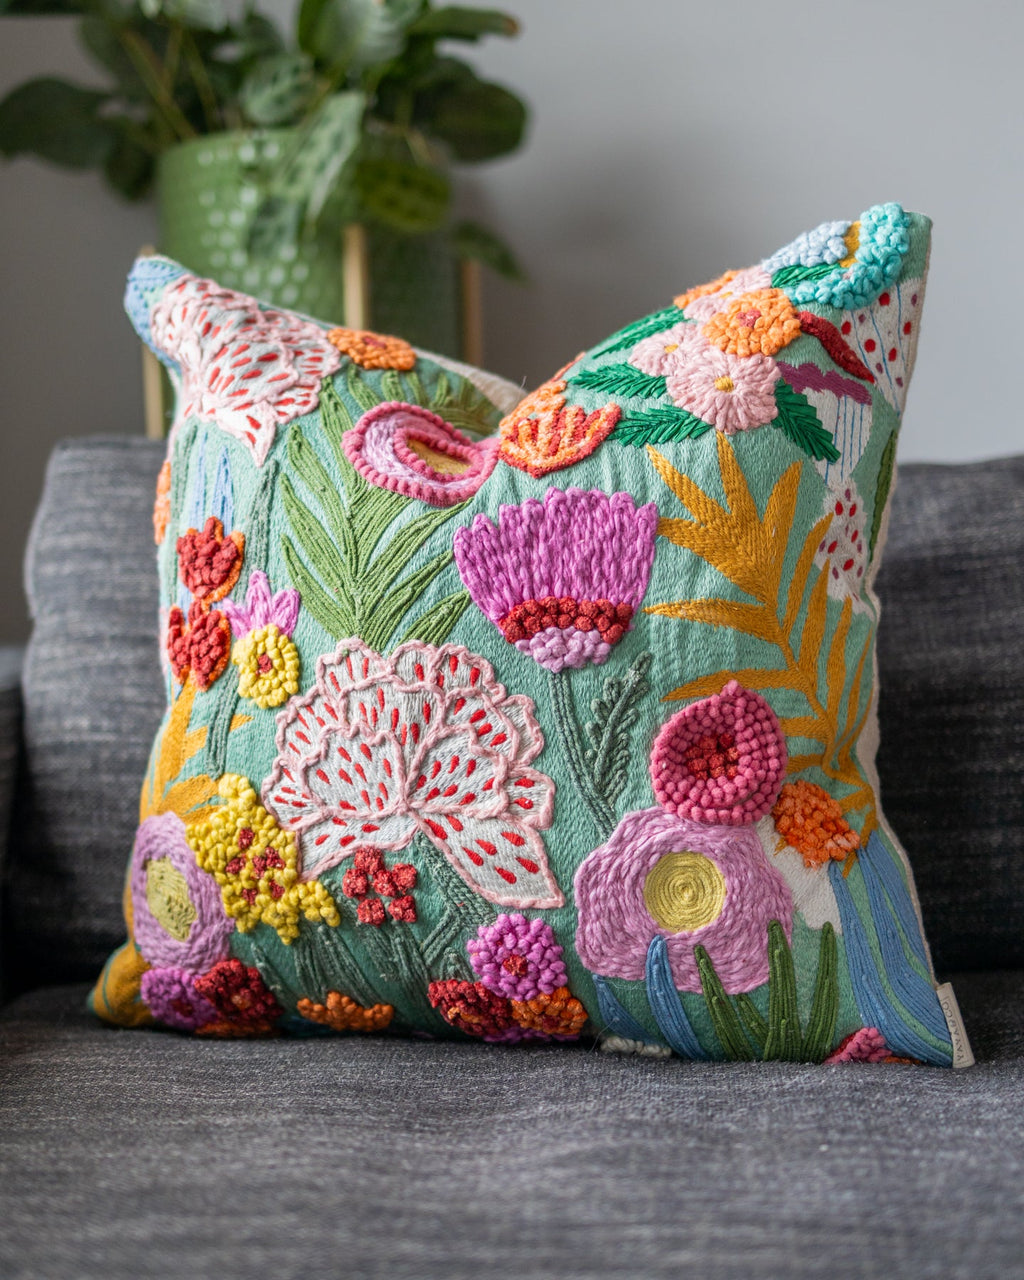 Embroidered Pillows & Throw Pillows